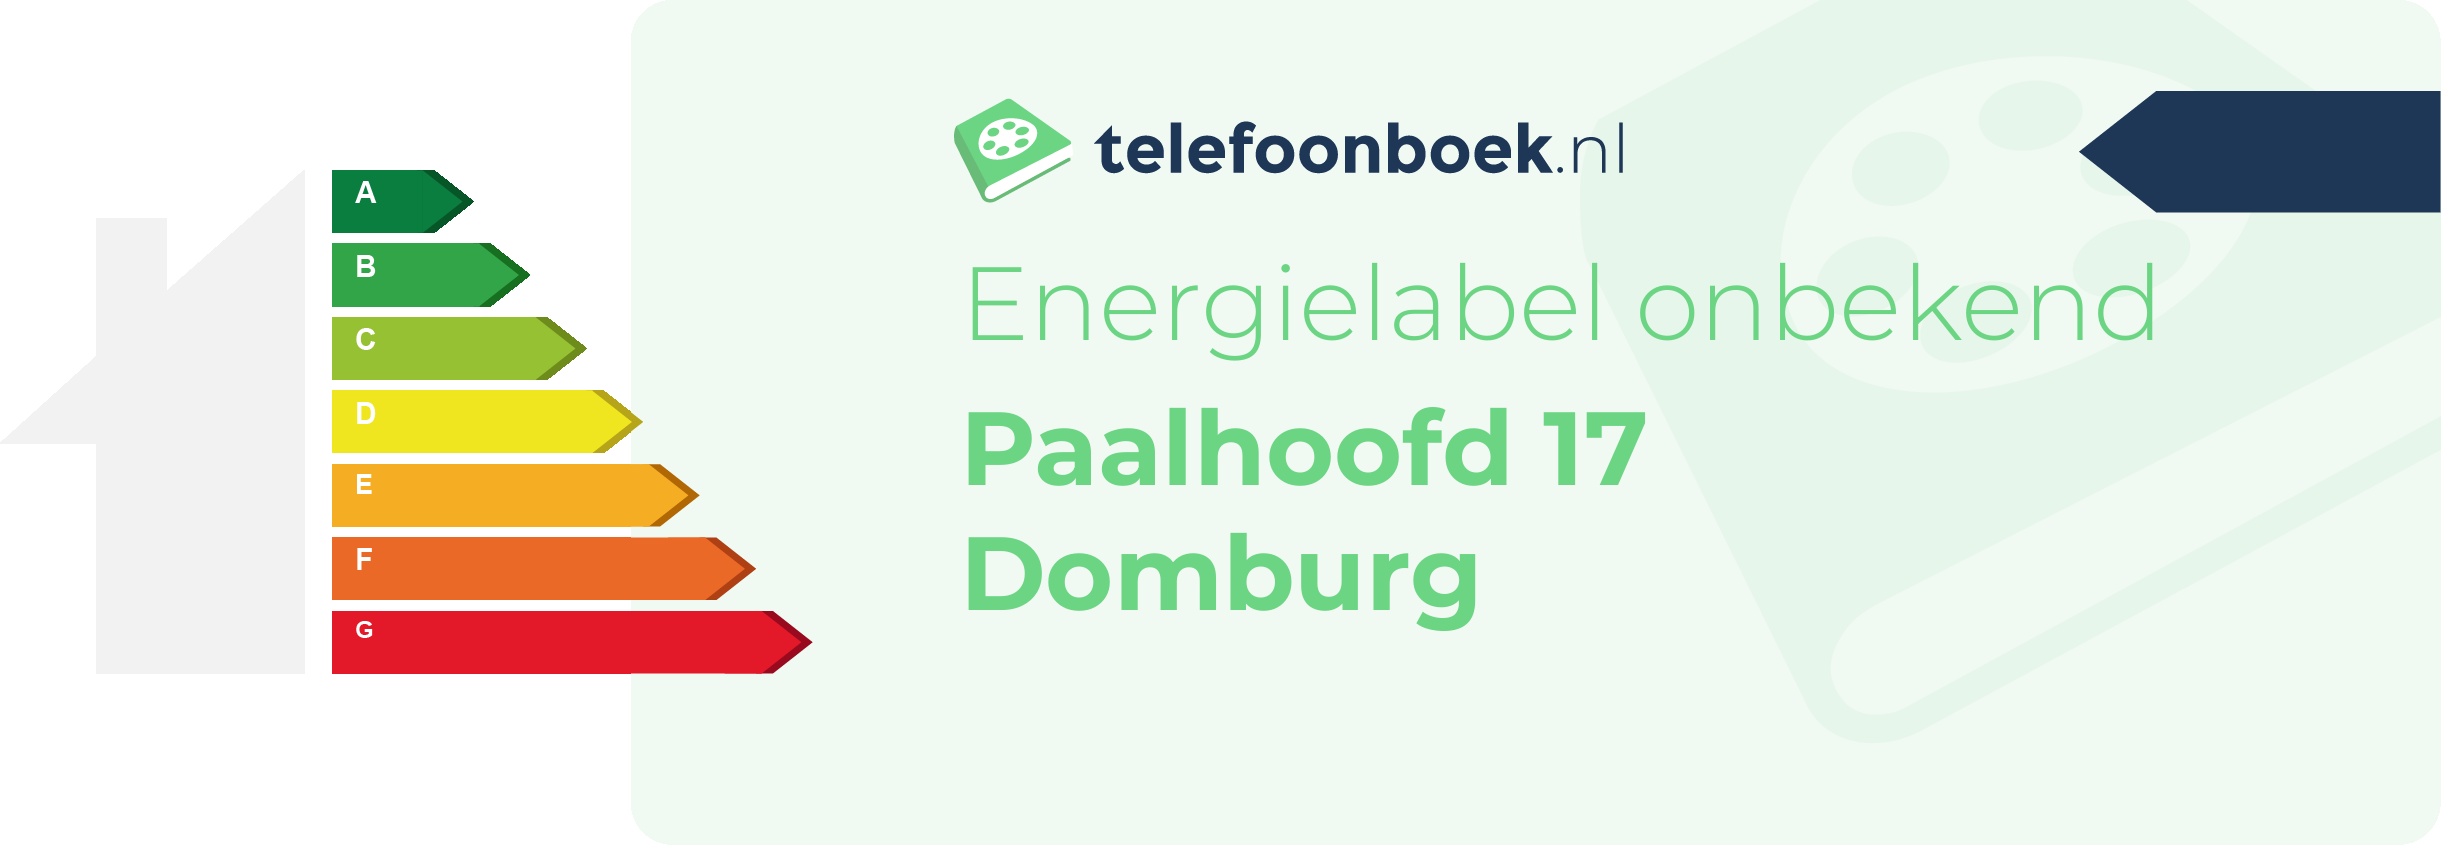 Energielabel Paalhoofd 17 Domburg